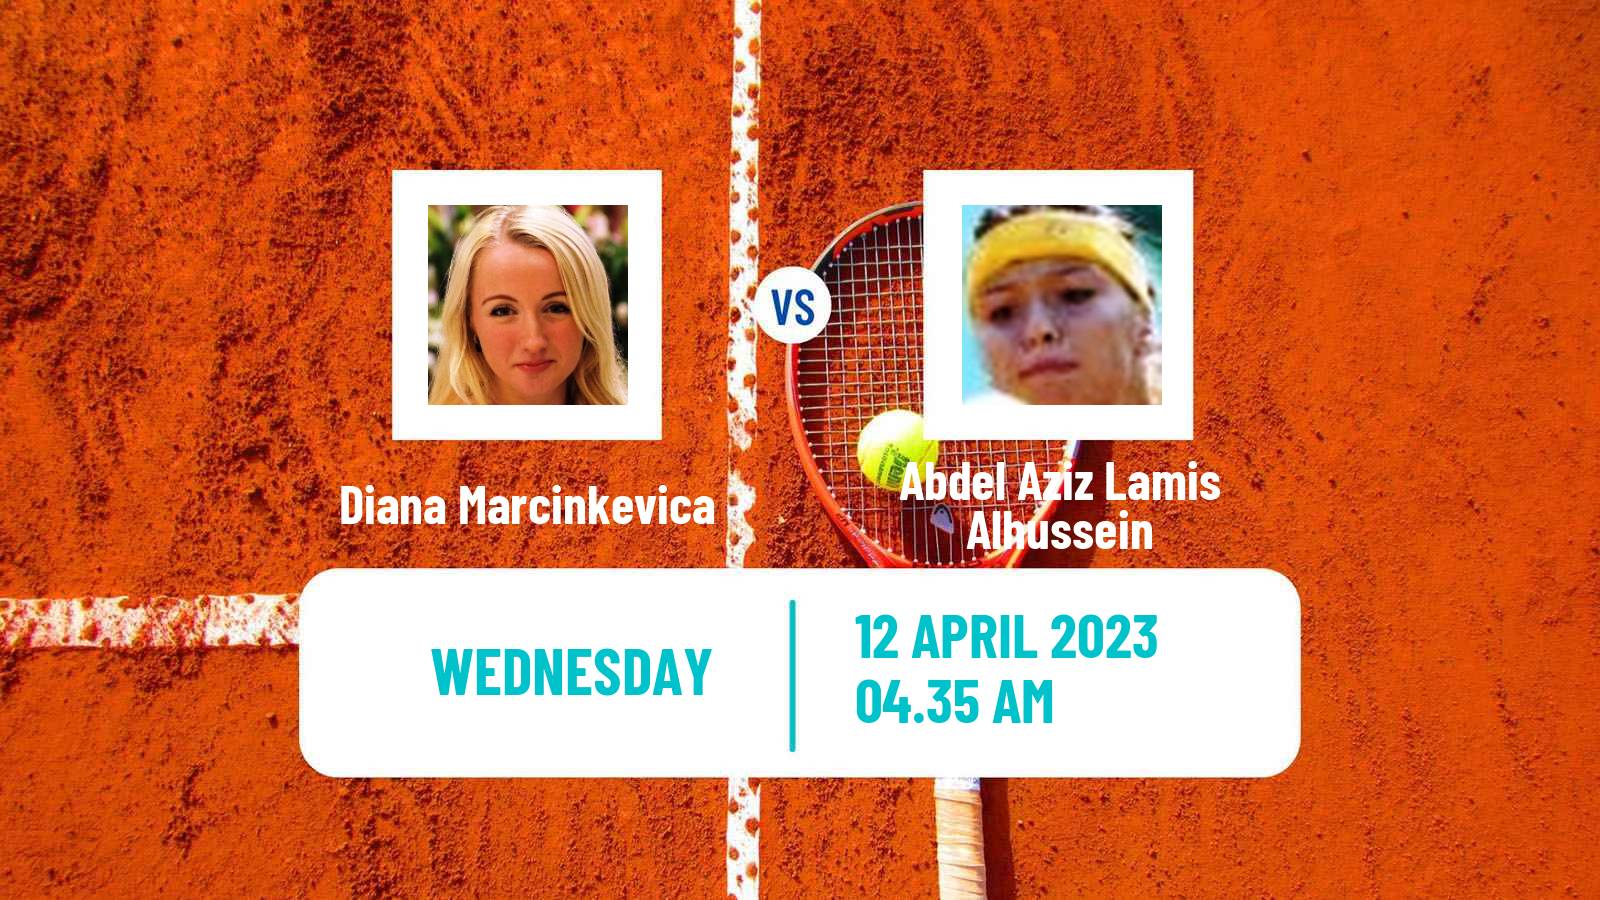 Tennis WTA Billie Jean King Cup Group I Diana Marcinkevica - Abdel Aziz Lamis Alhussein